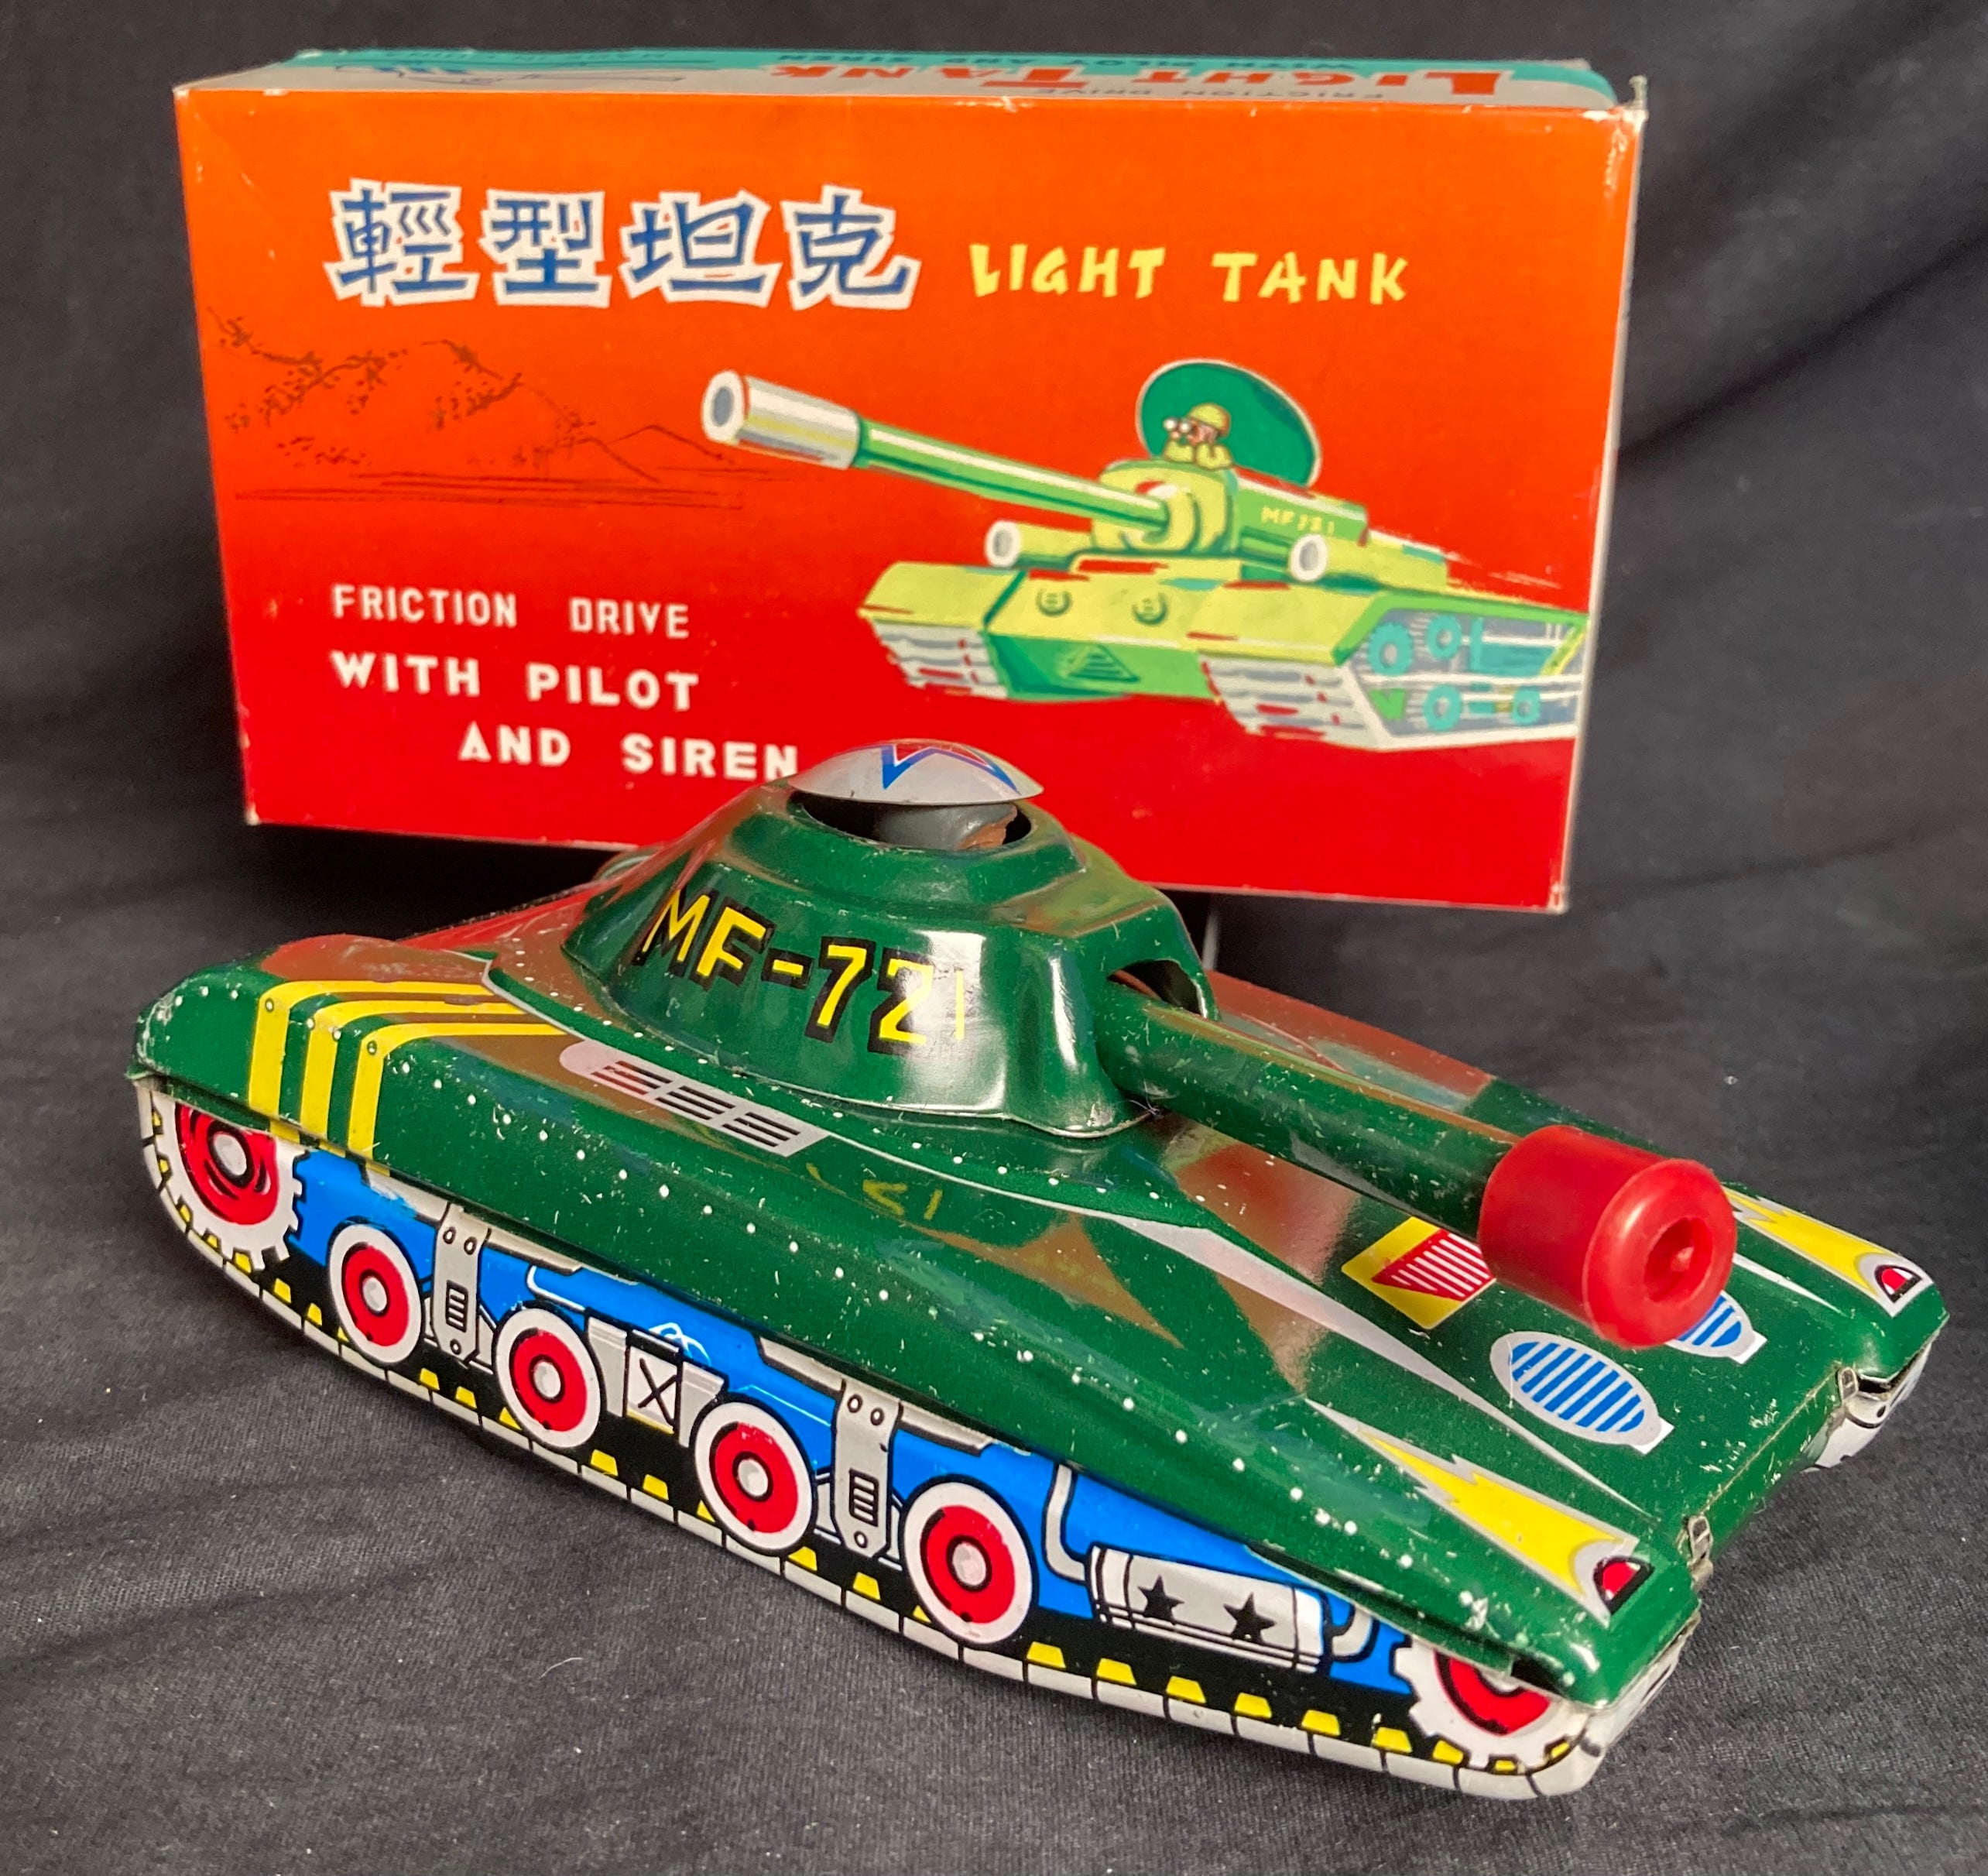 Main Street Toys - VIntage China Tin Friction Light Tank MF 721